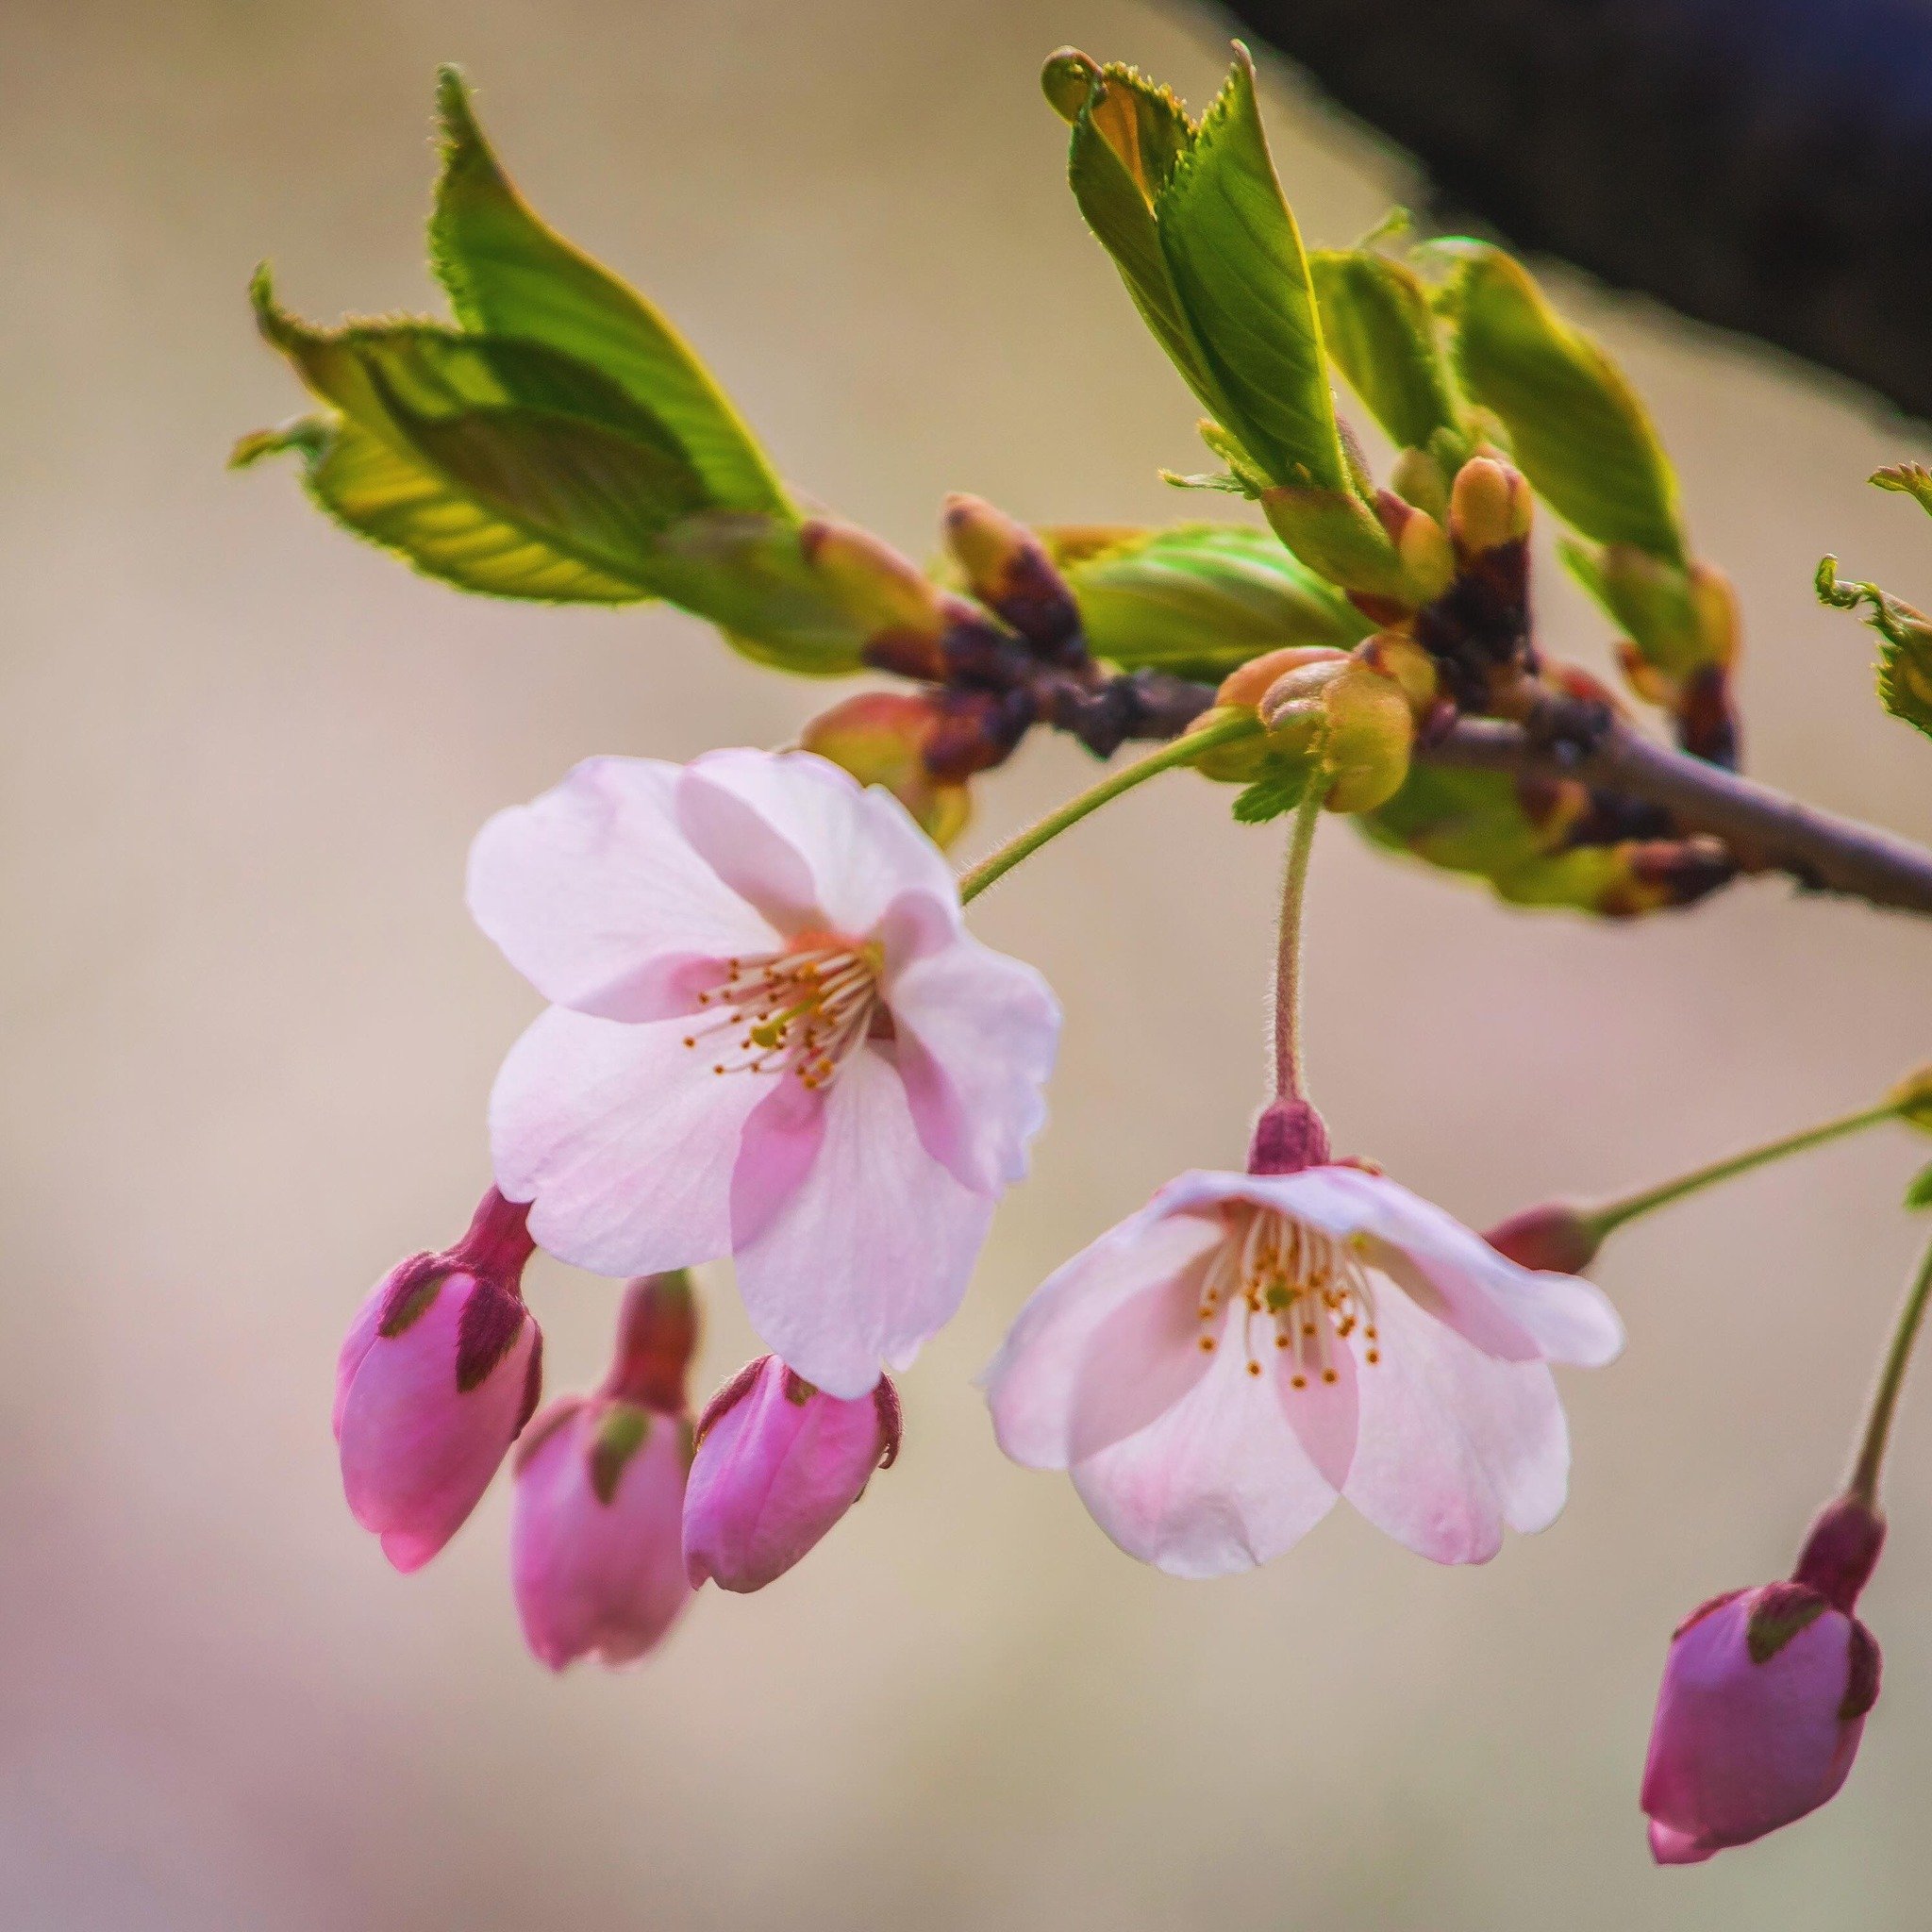 Cherry Blossoms are Out!
&mdash;&mdash;&mdash;&mdash;&mdash;&mdash;&mdash;&mdash;&mdash;&mdash;&mdash;&mdash;&mdash;&mdash;
#toronto #sakura #cherryblossom #nature #signsofspring #cherryblossoms #cherryblossomsoftoronto #torontophoto #naturephotograp